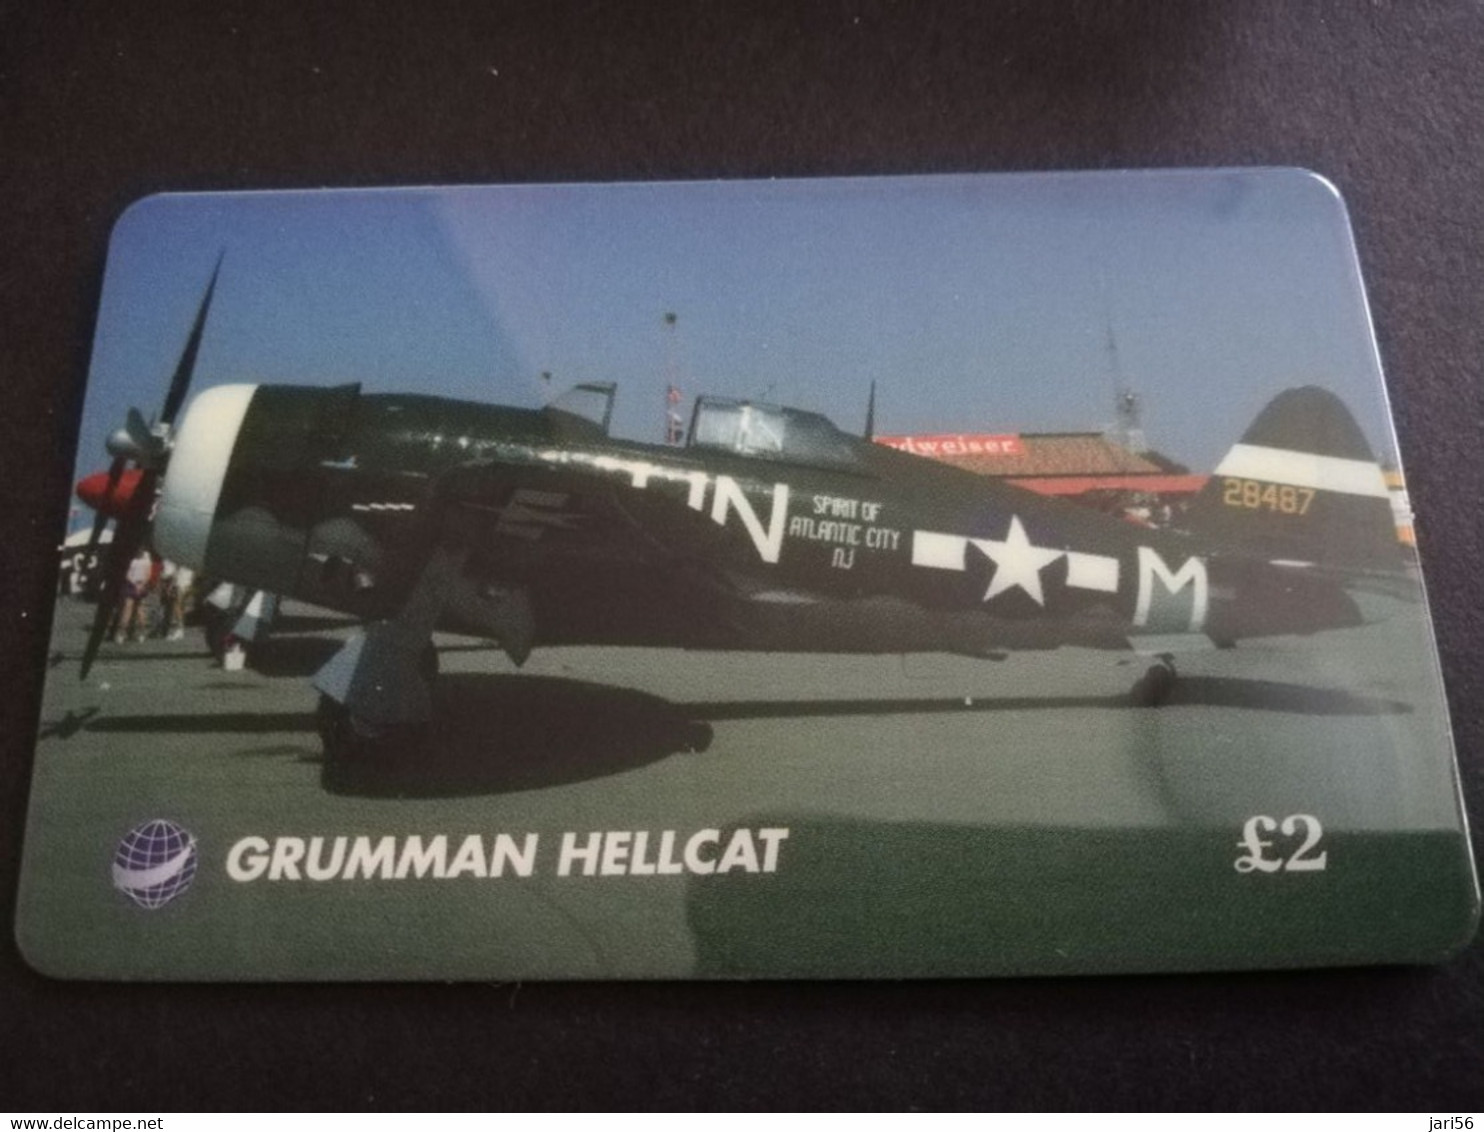 GREAT BRITAIN   2 POUND  AIR PLANES    GRUMMAN HELLCAT   PREPAID CARD      **5445** - [10] Collections